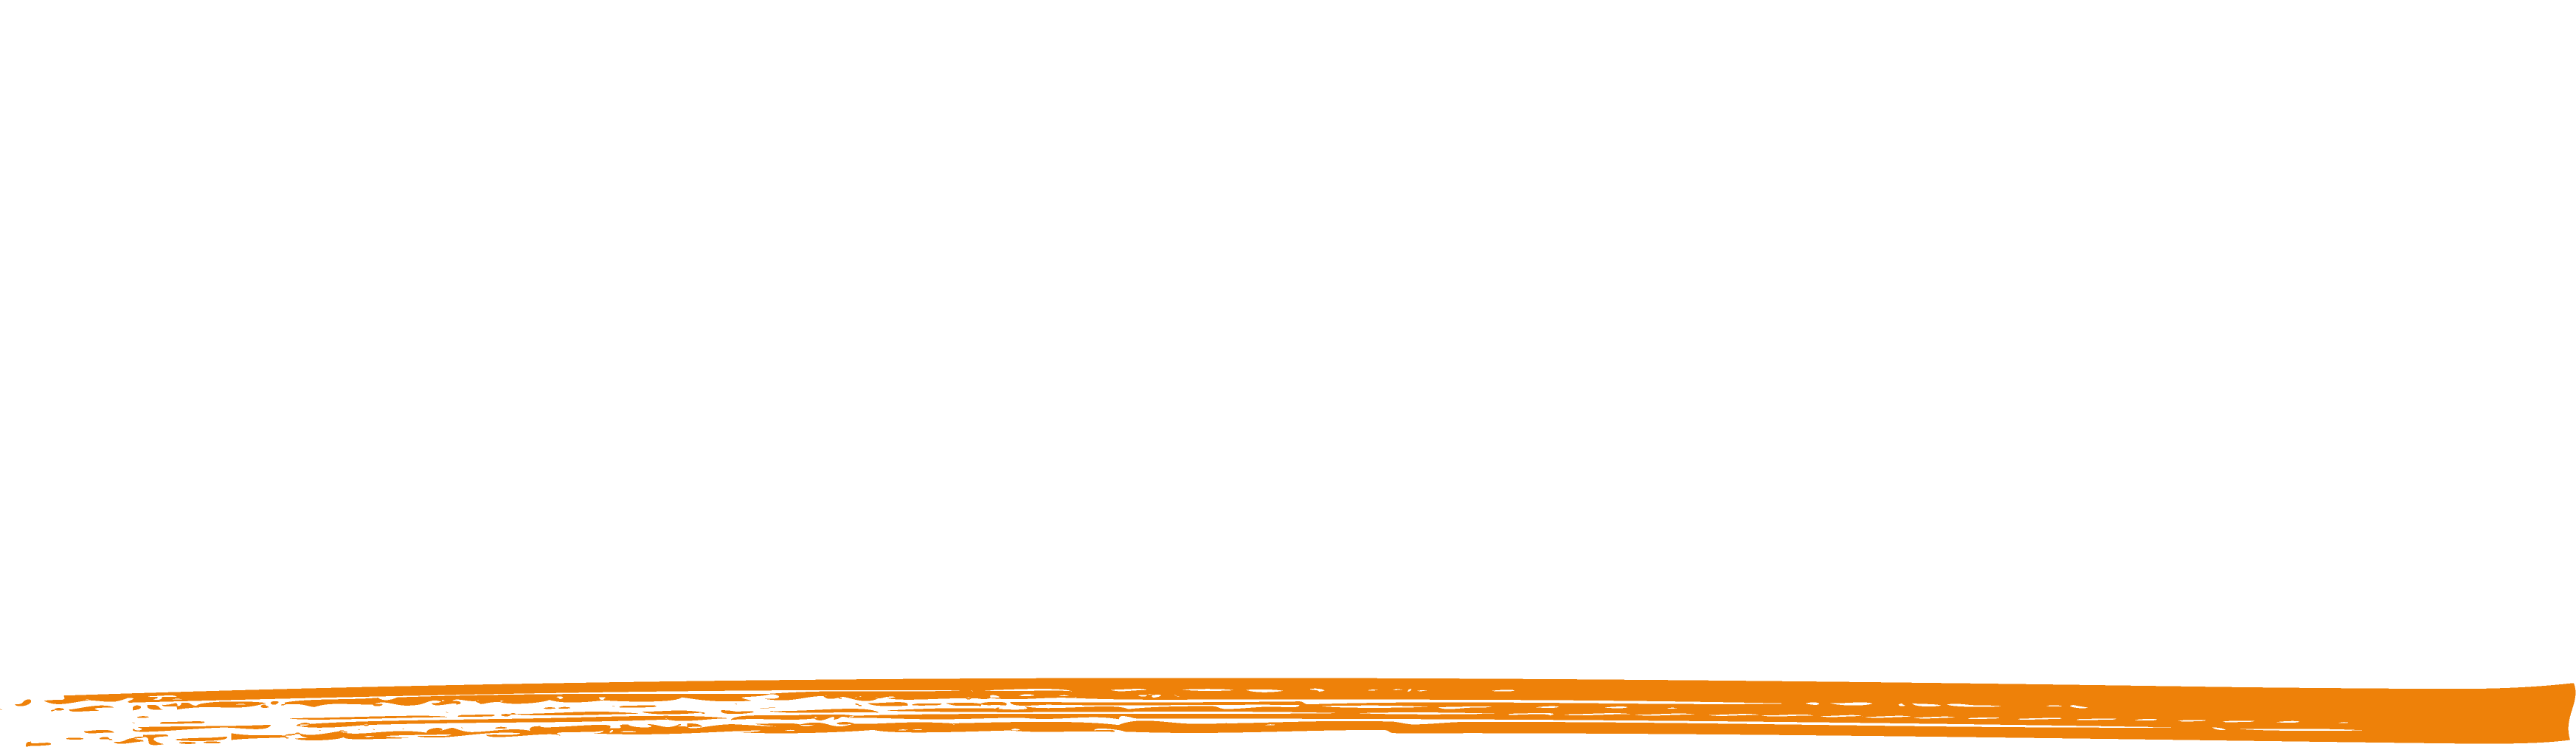 Parkhouse Bell Logo